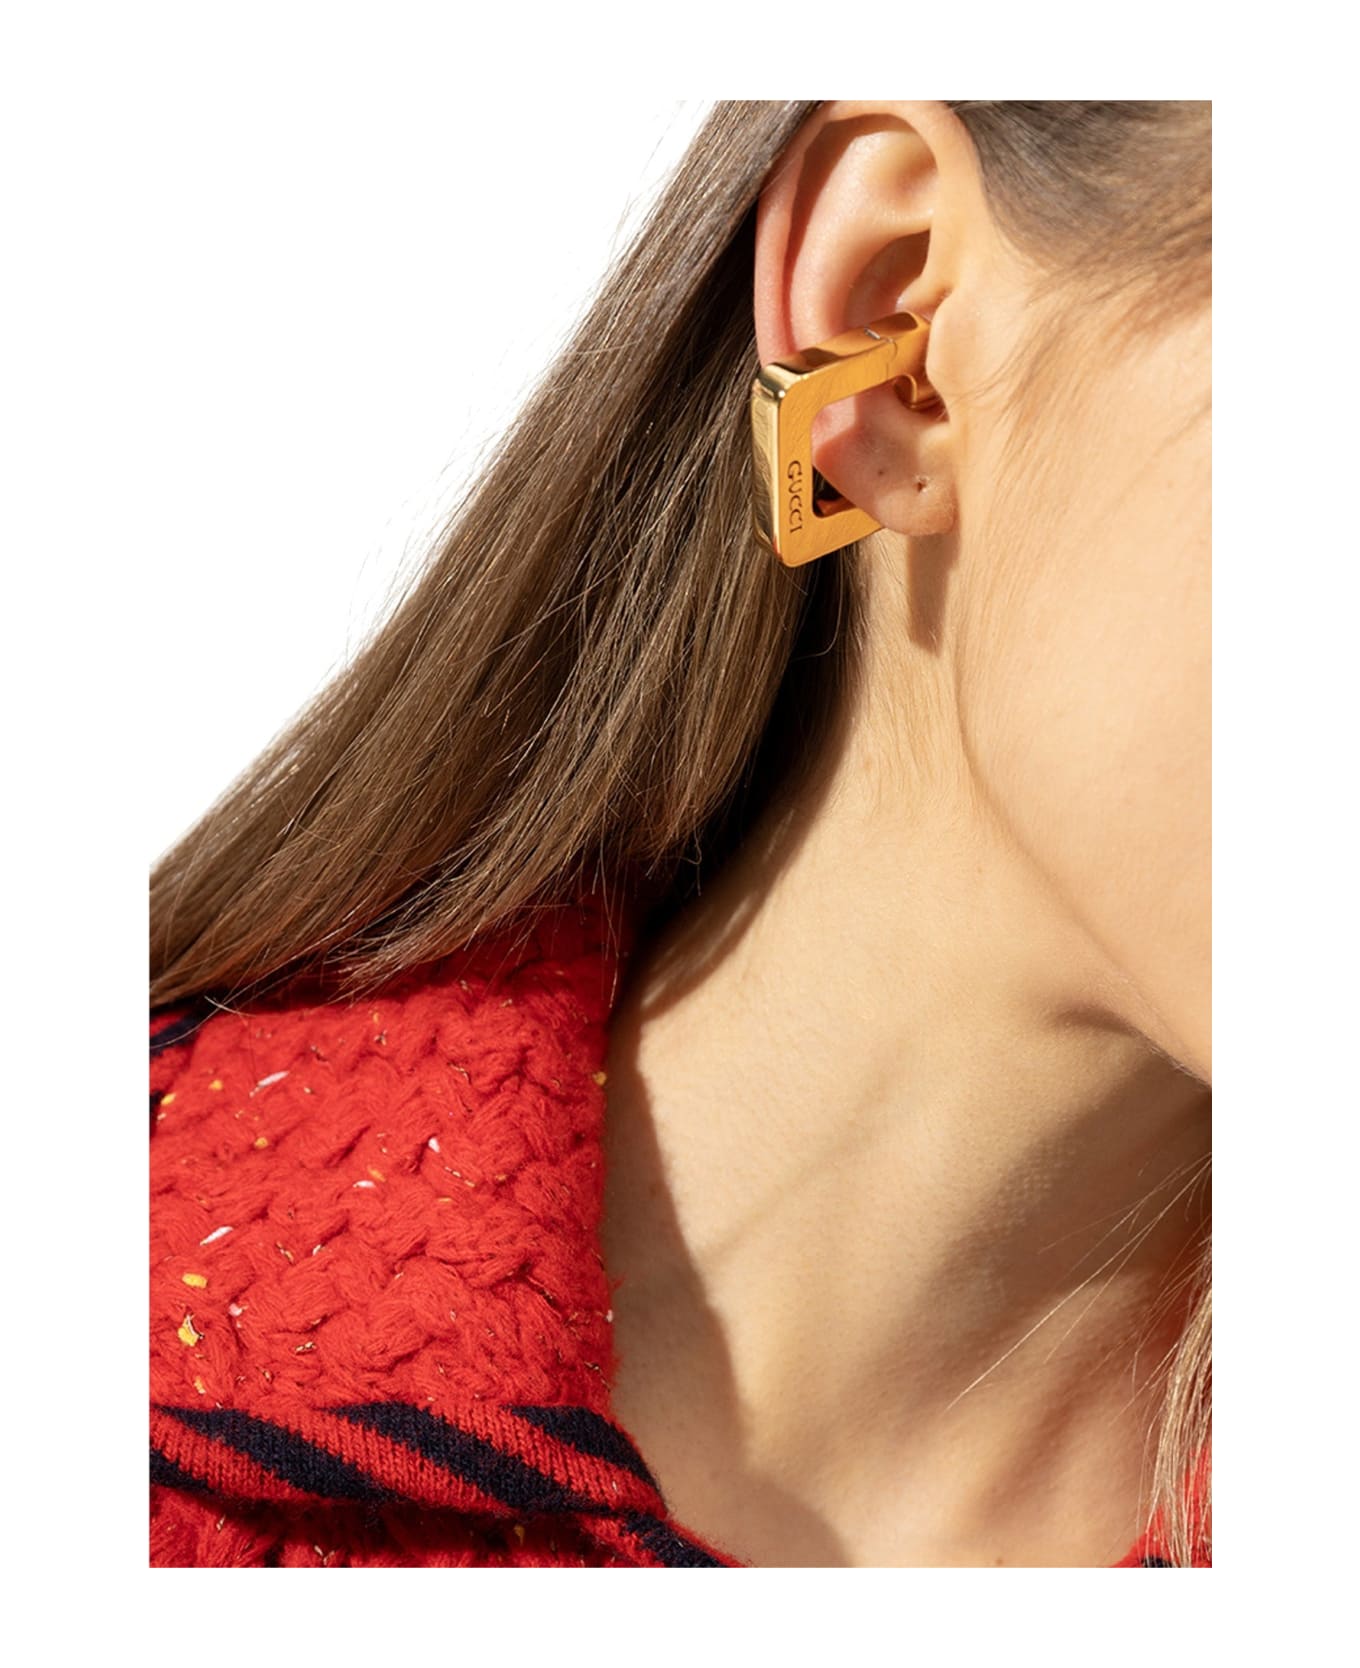 Gucci Logo Cuff Earring - Gold